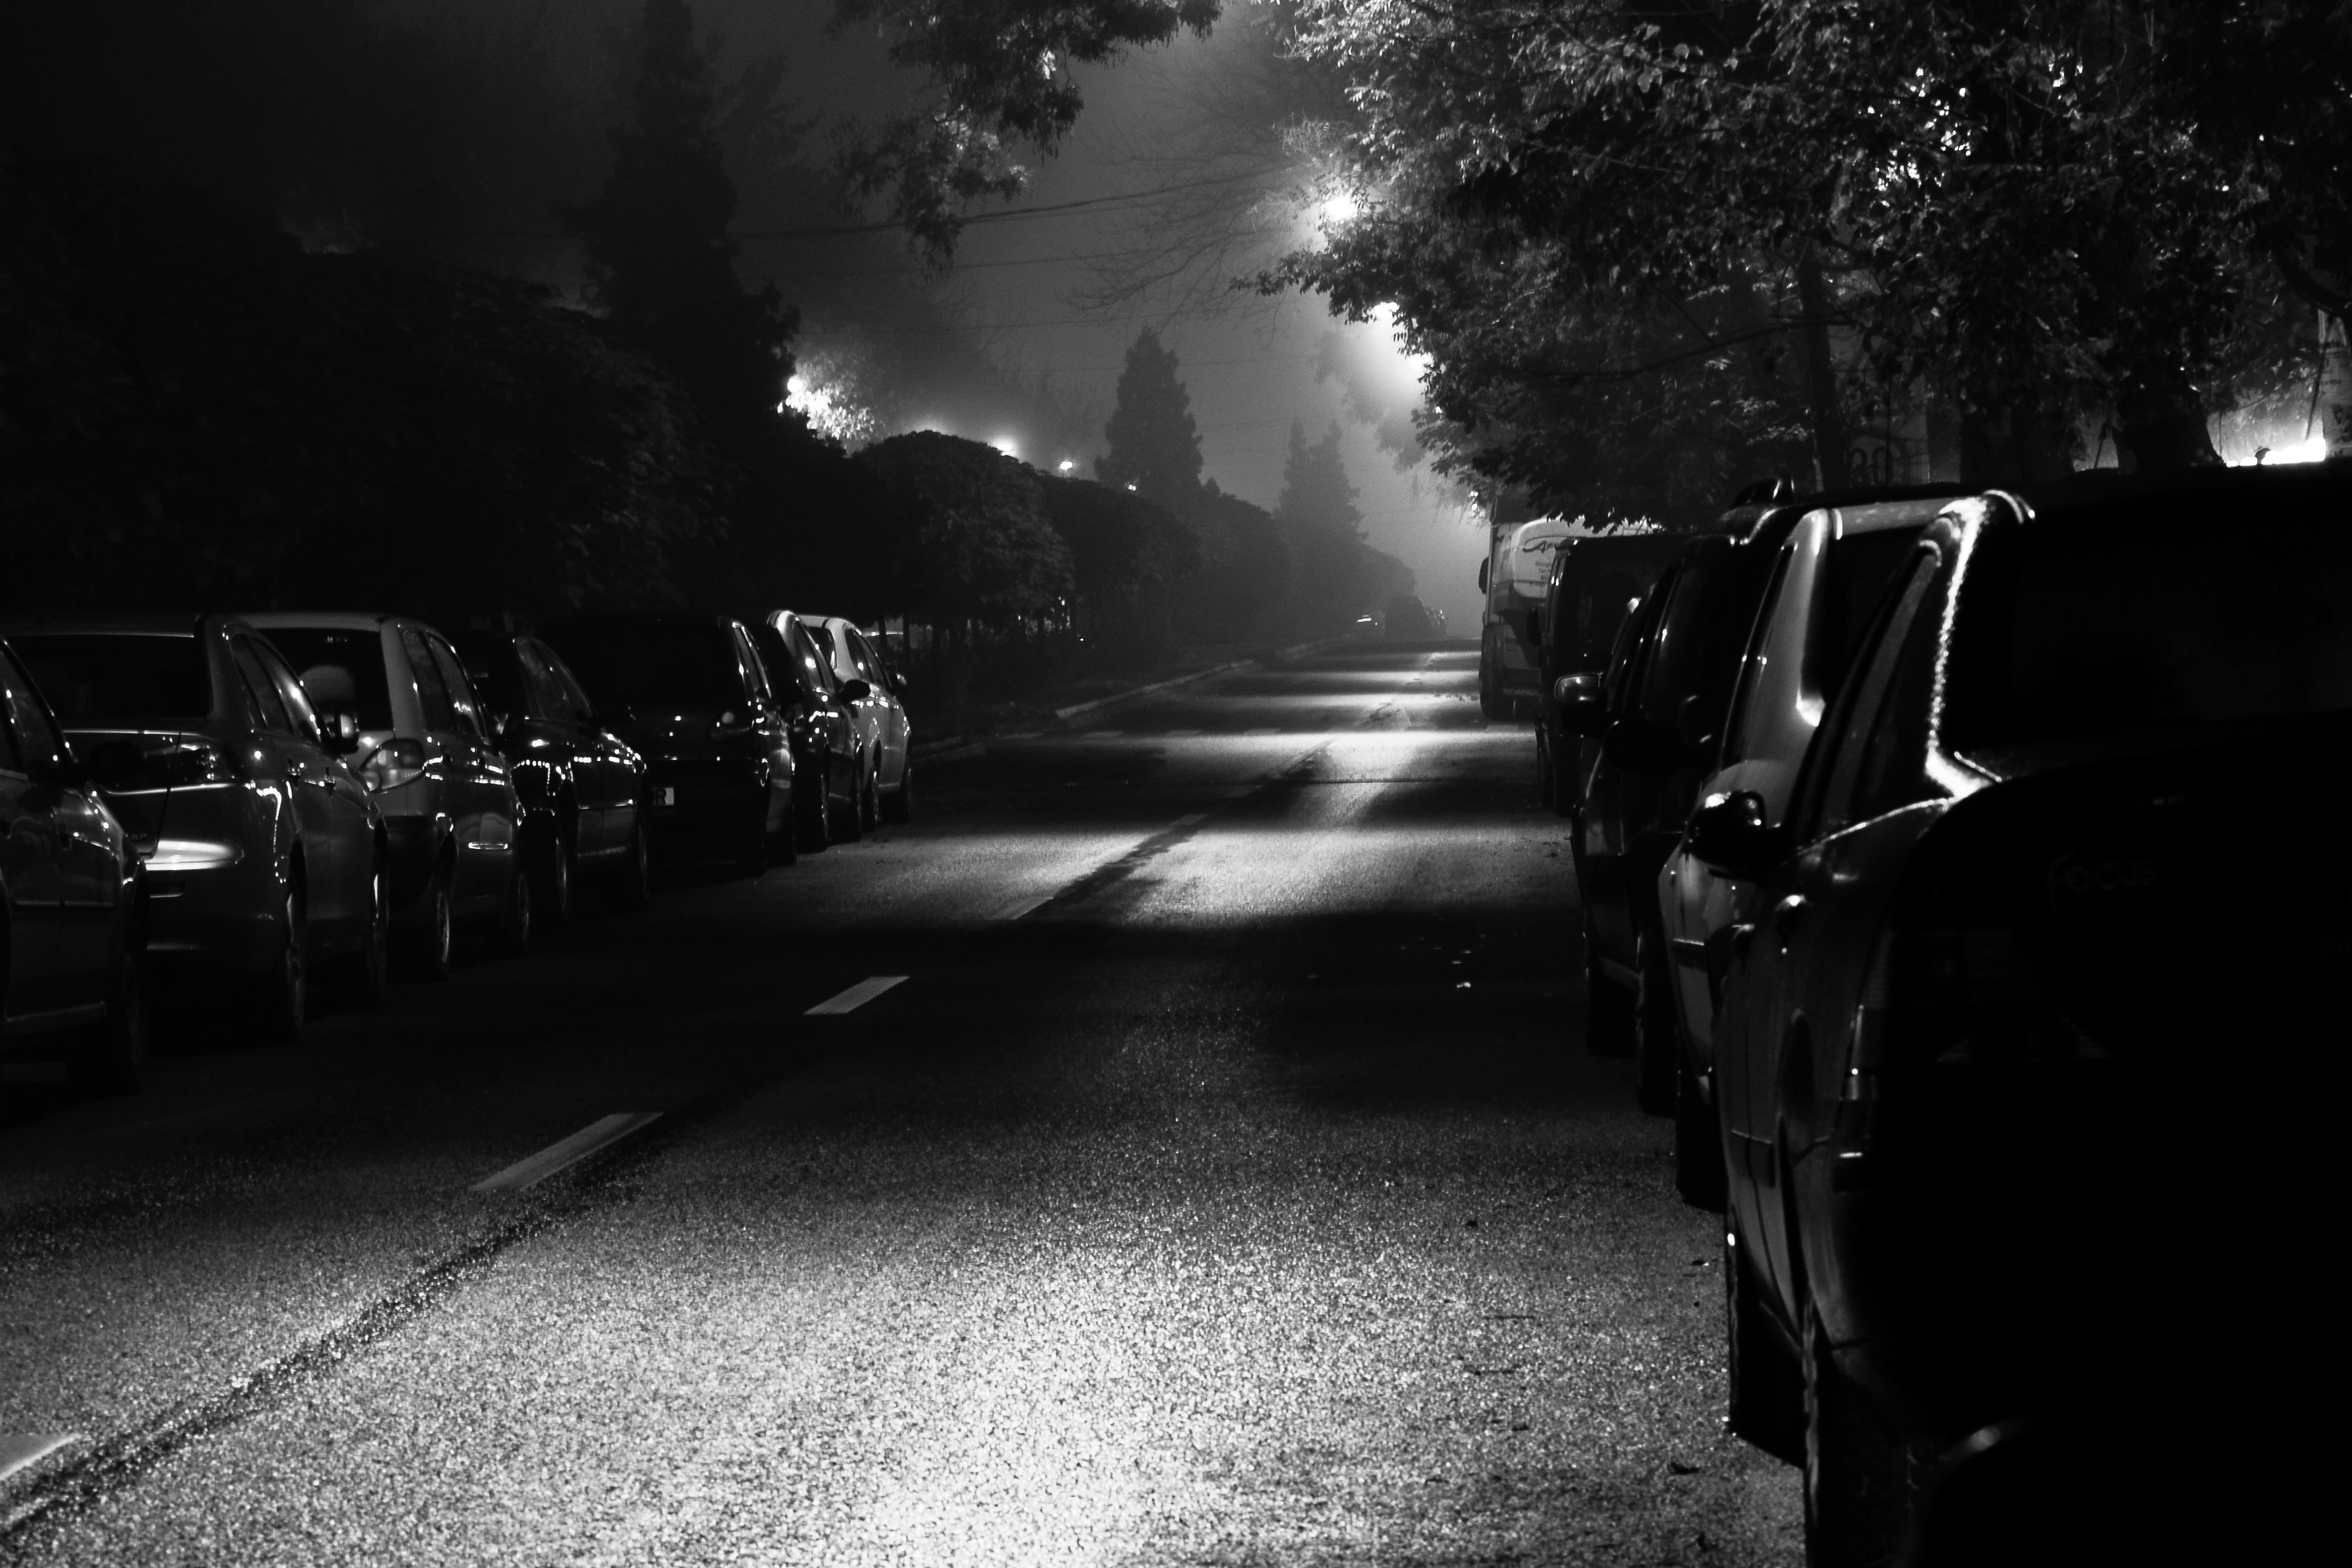 Street on night, Cars, Dark, Dusk, Empty, HQ Photo